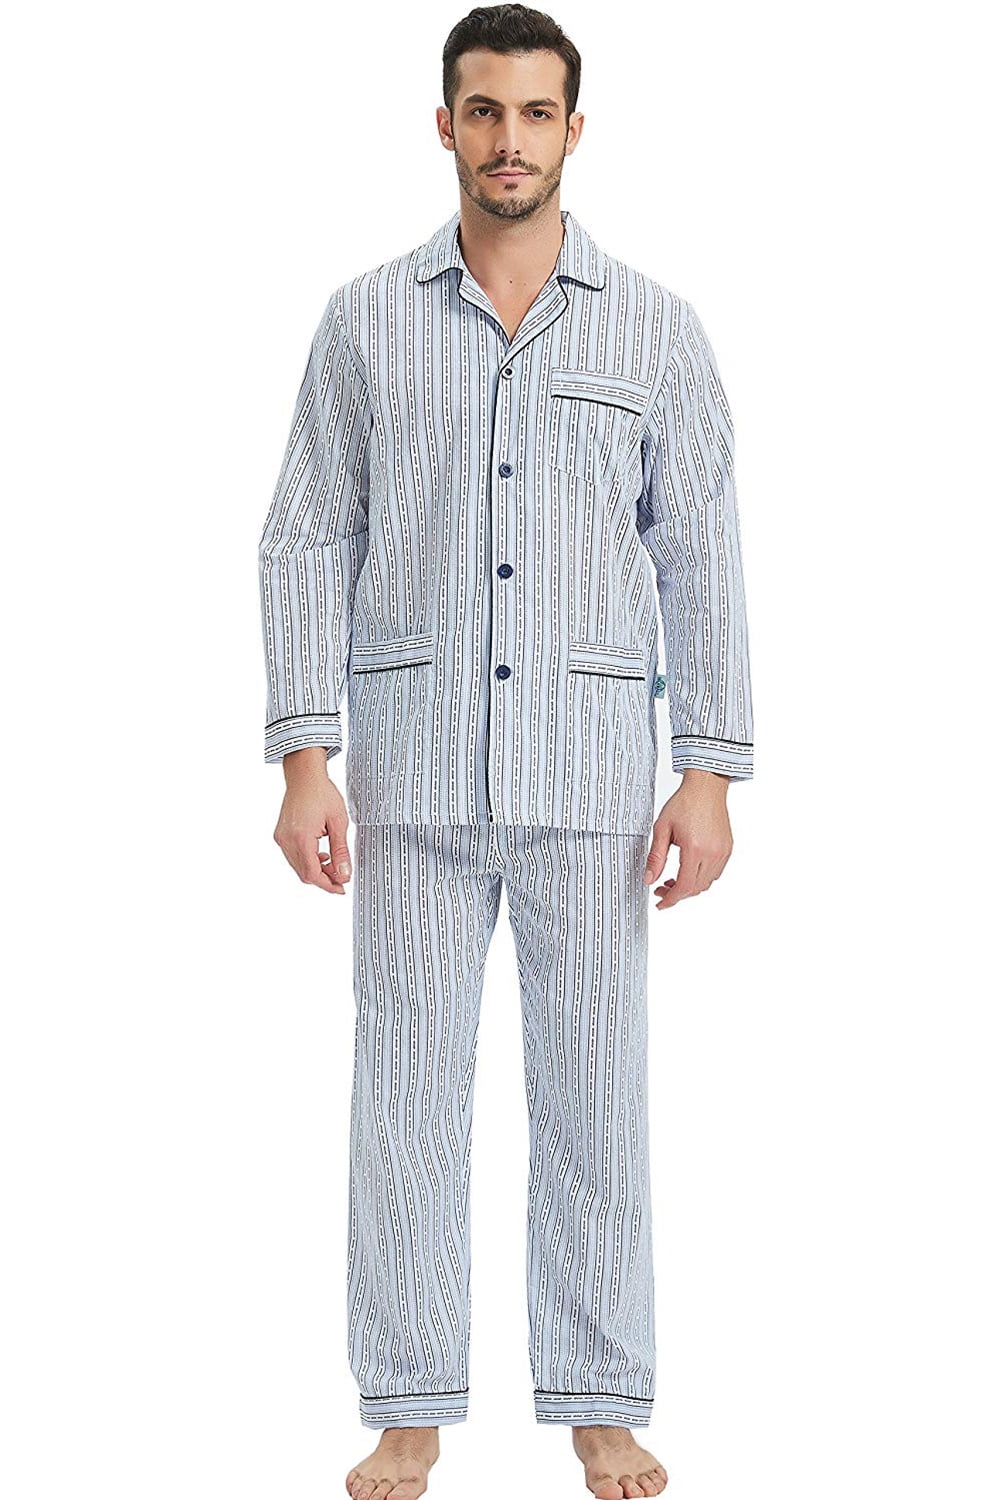 100% Cotton Woven Drawstring Sleepwear Set with Top and Pants/Bottoms GLOBAL Mens Pyjamas Set